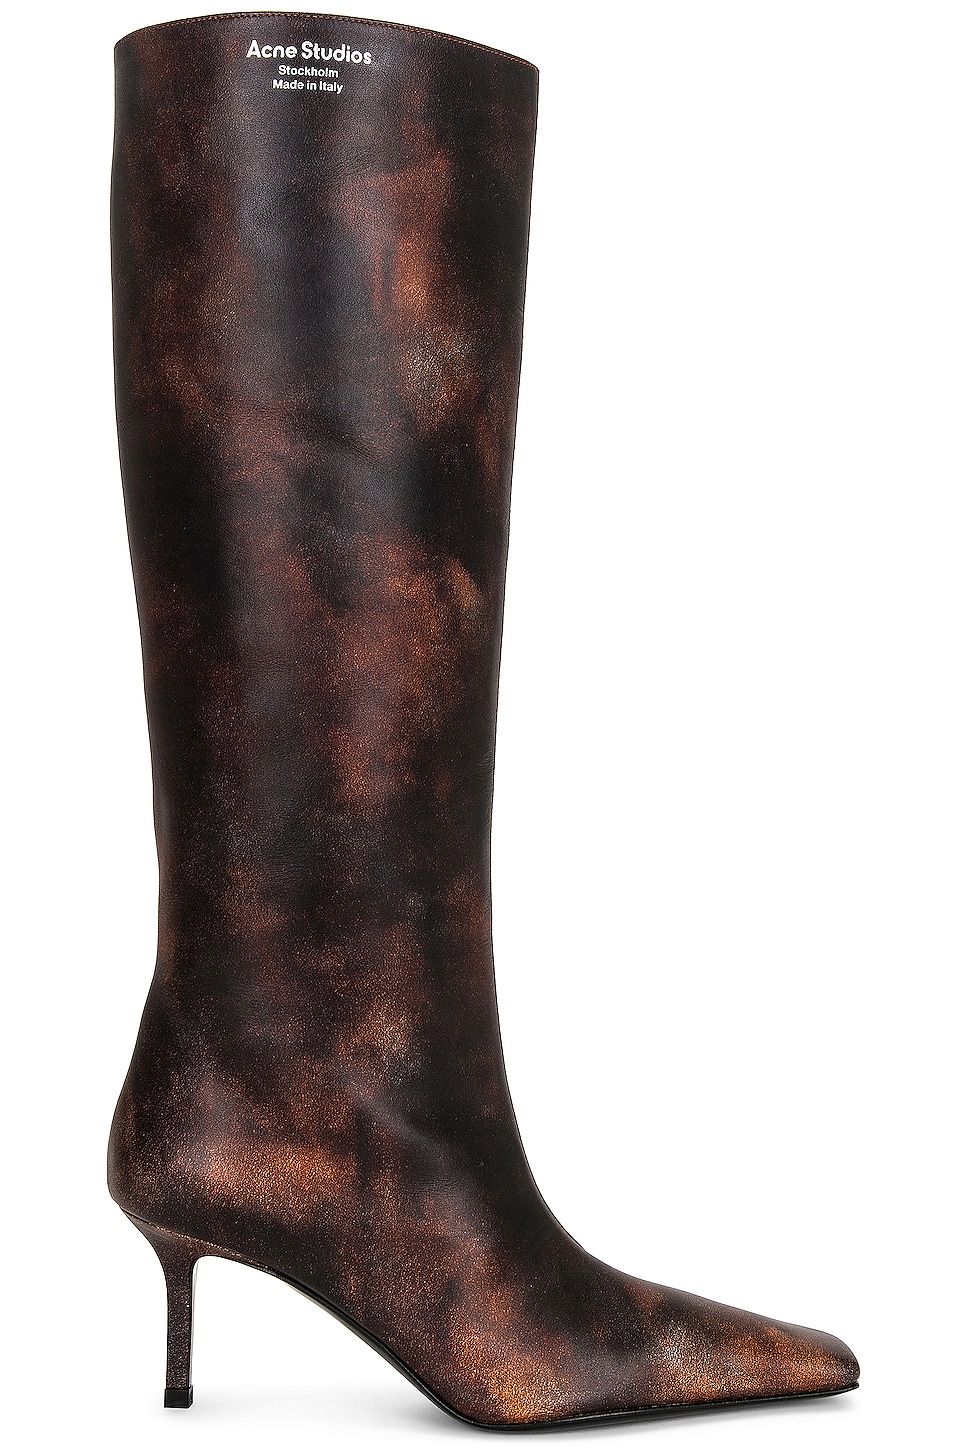 Image 1 of Acne Studios Kitten Heel Boot in Multi Brown